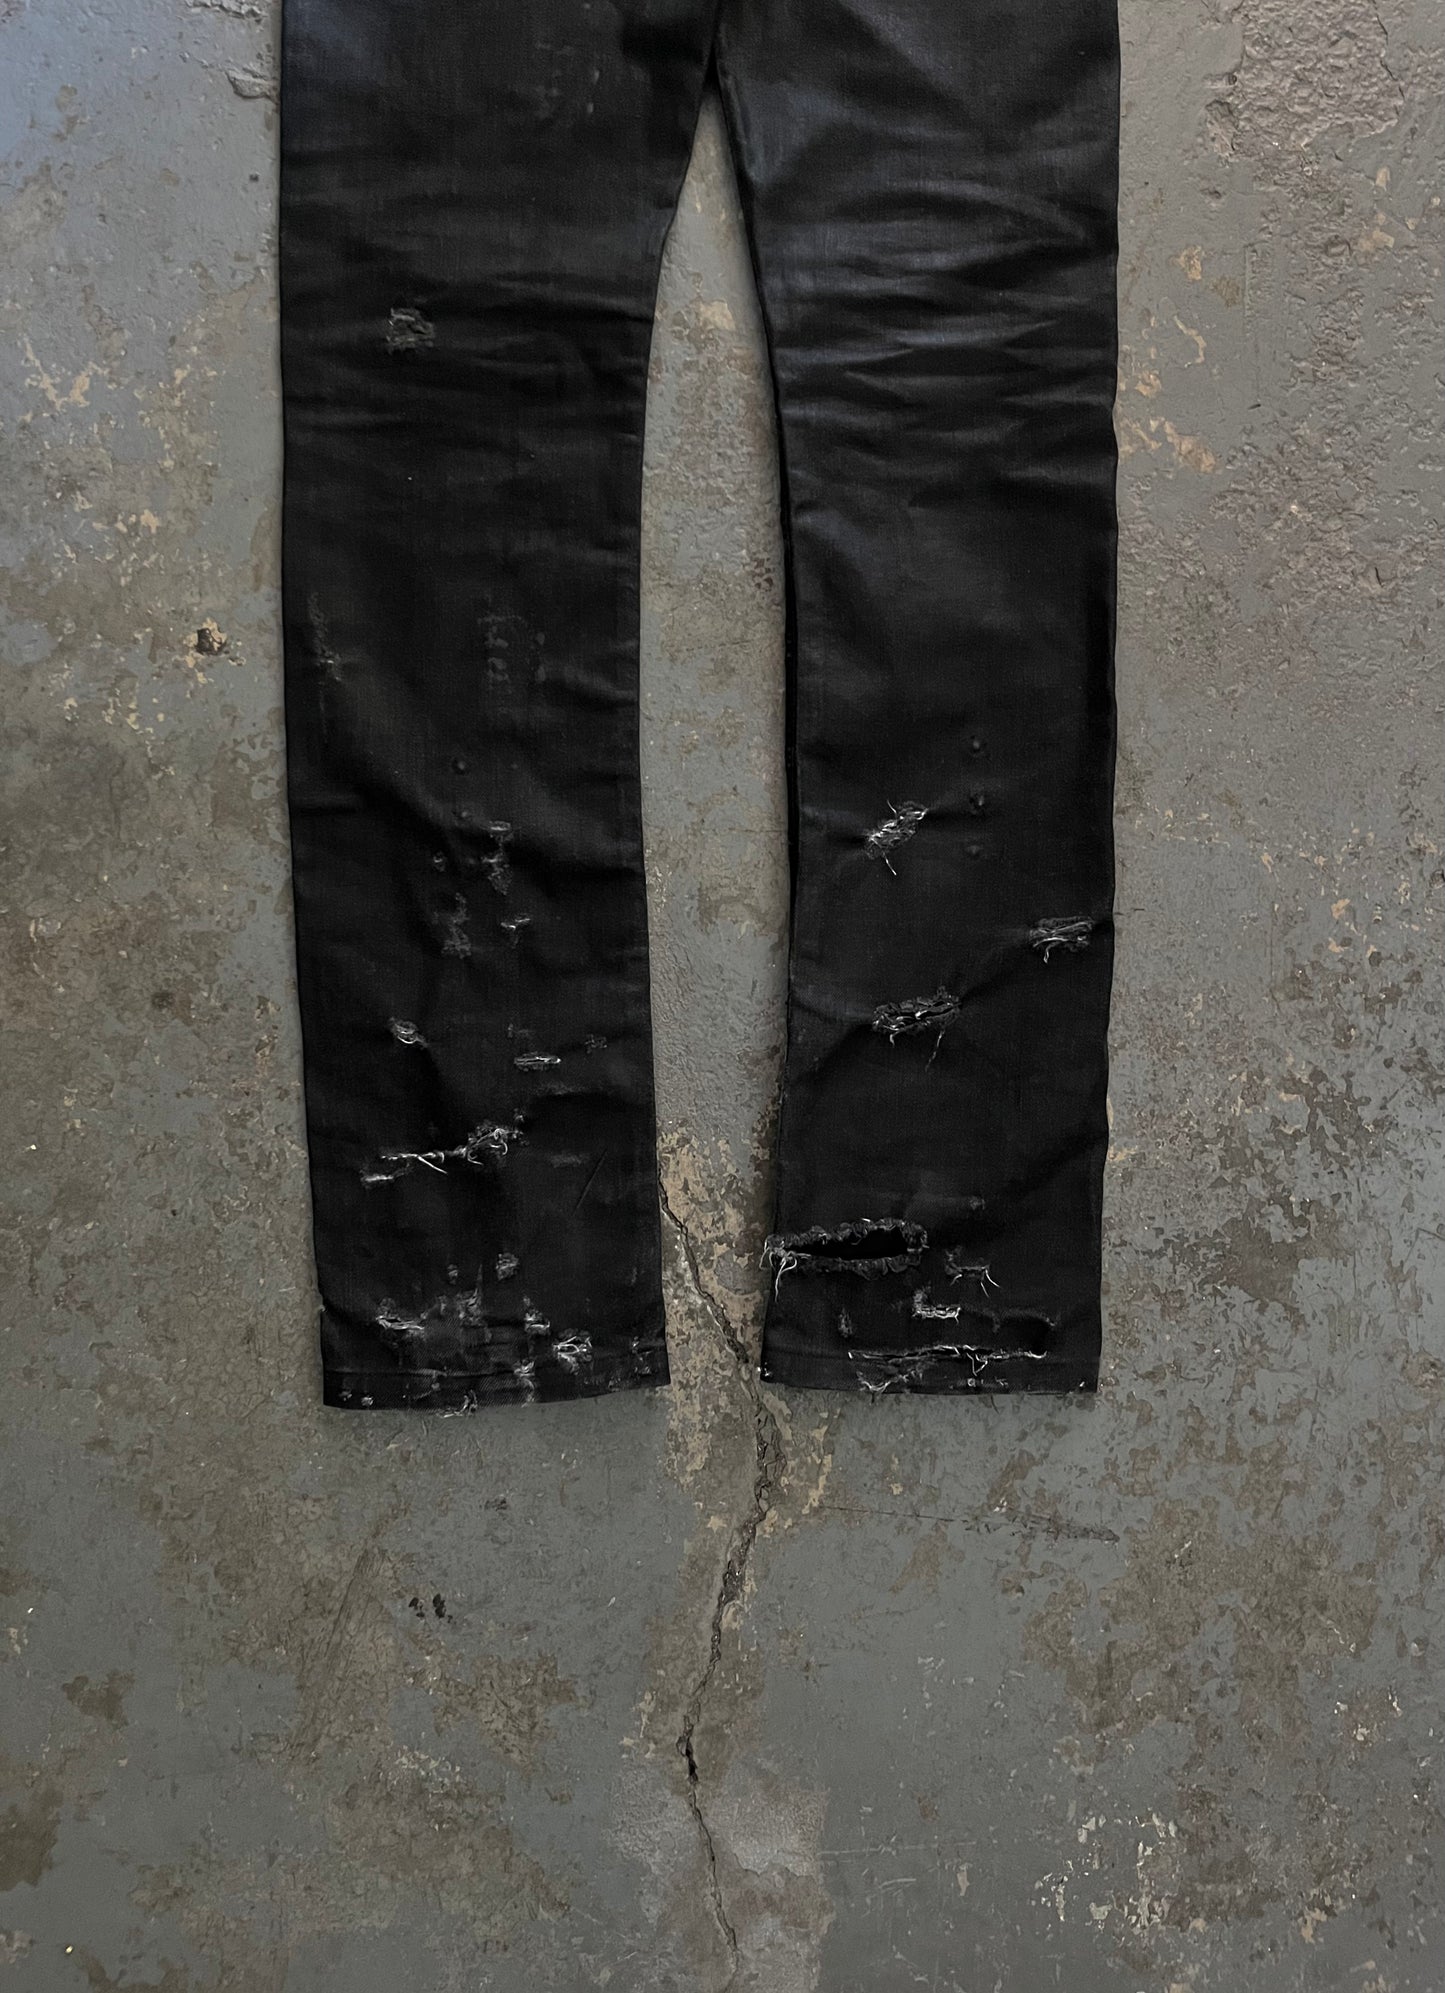 Dior Homme SS04 “STRIP” Destroyed Wax Jeans